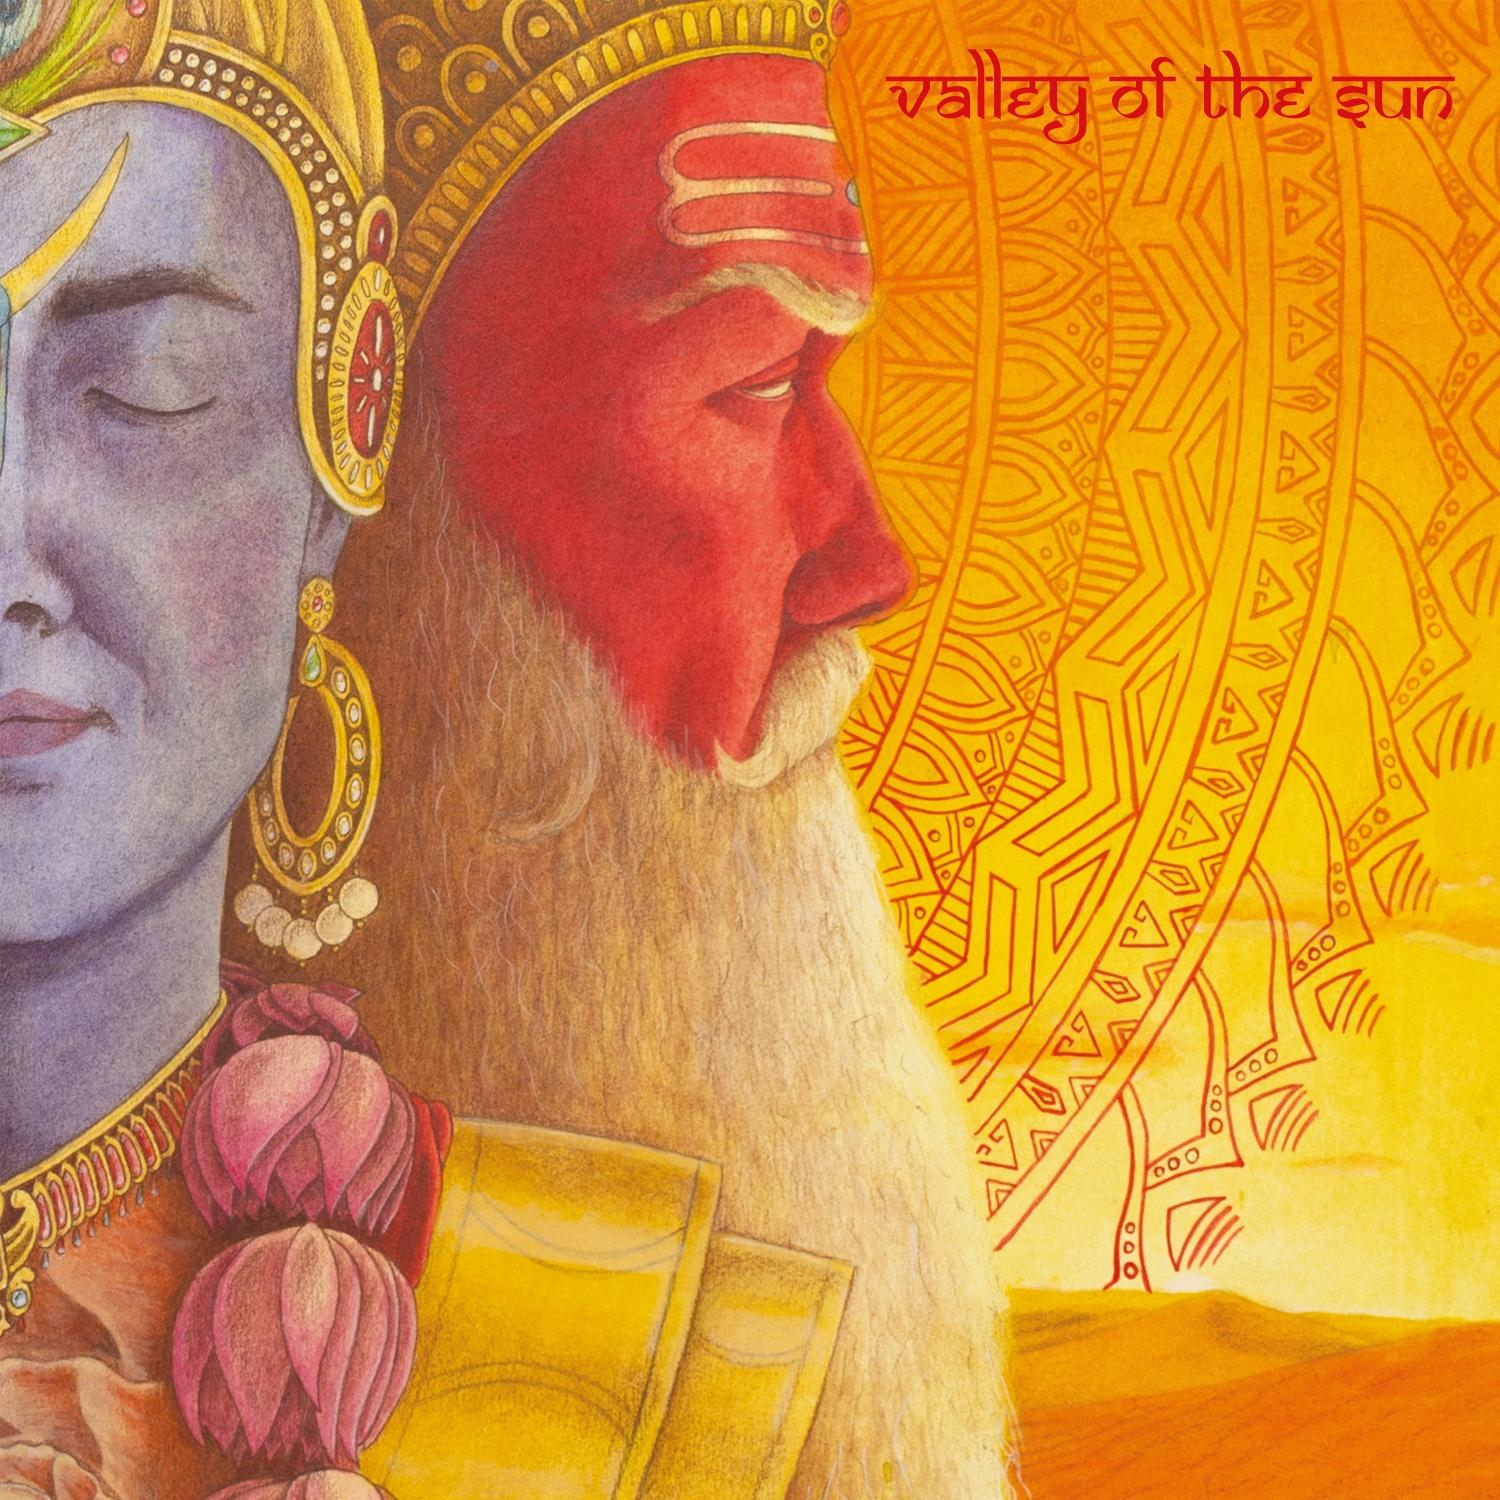 Valley Of The Sun - Gods Old (Black (Vinyl) Vinyl) 